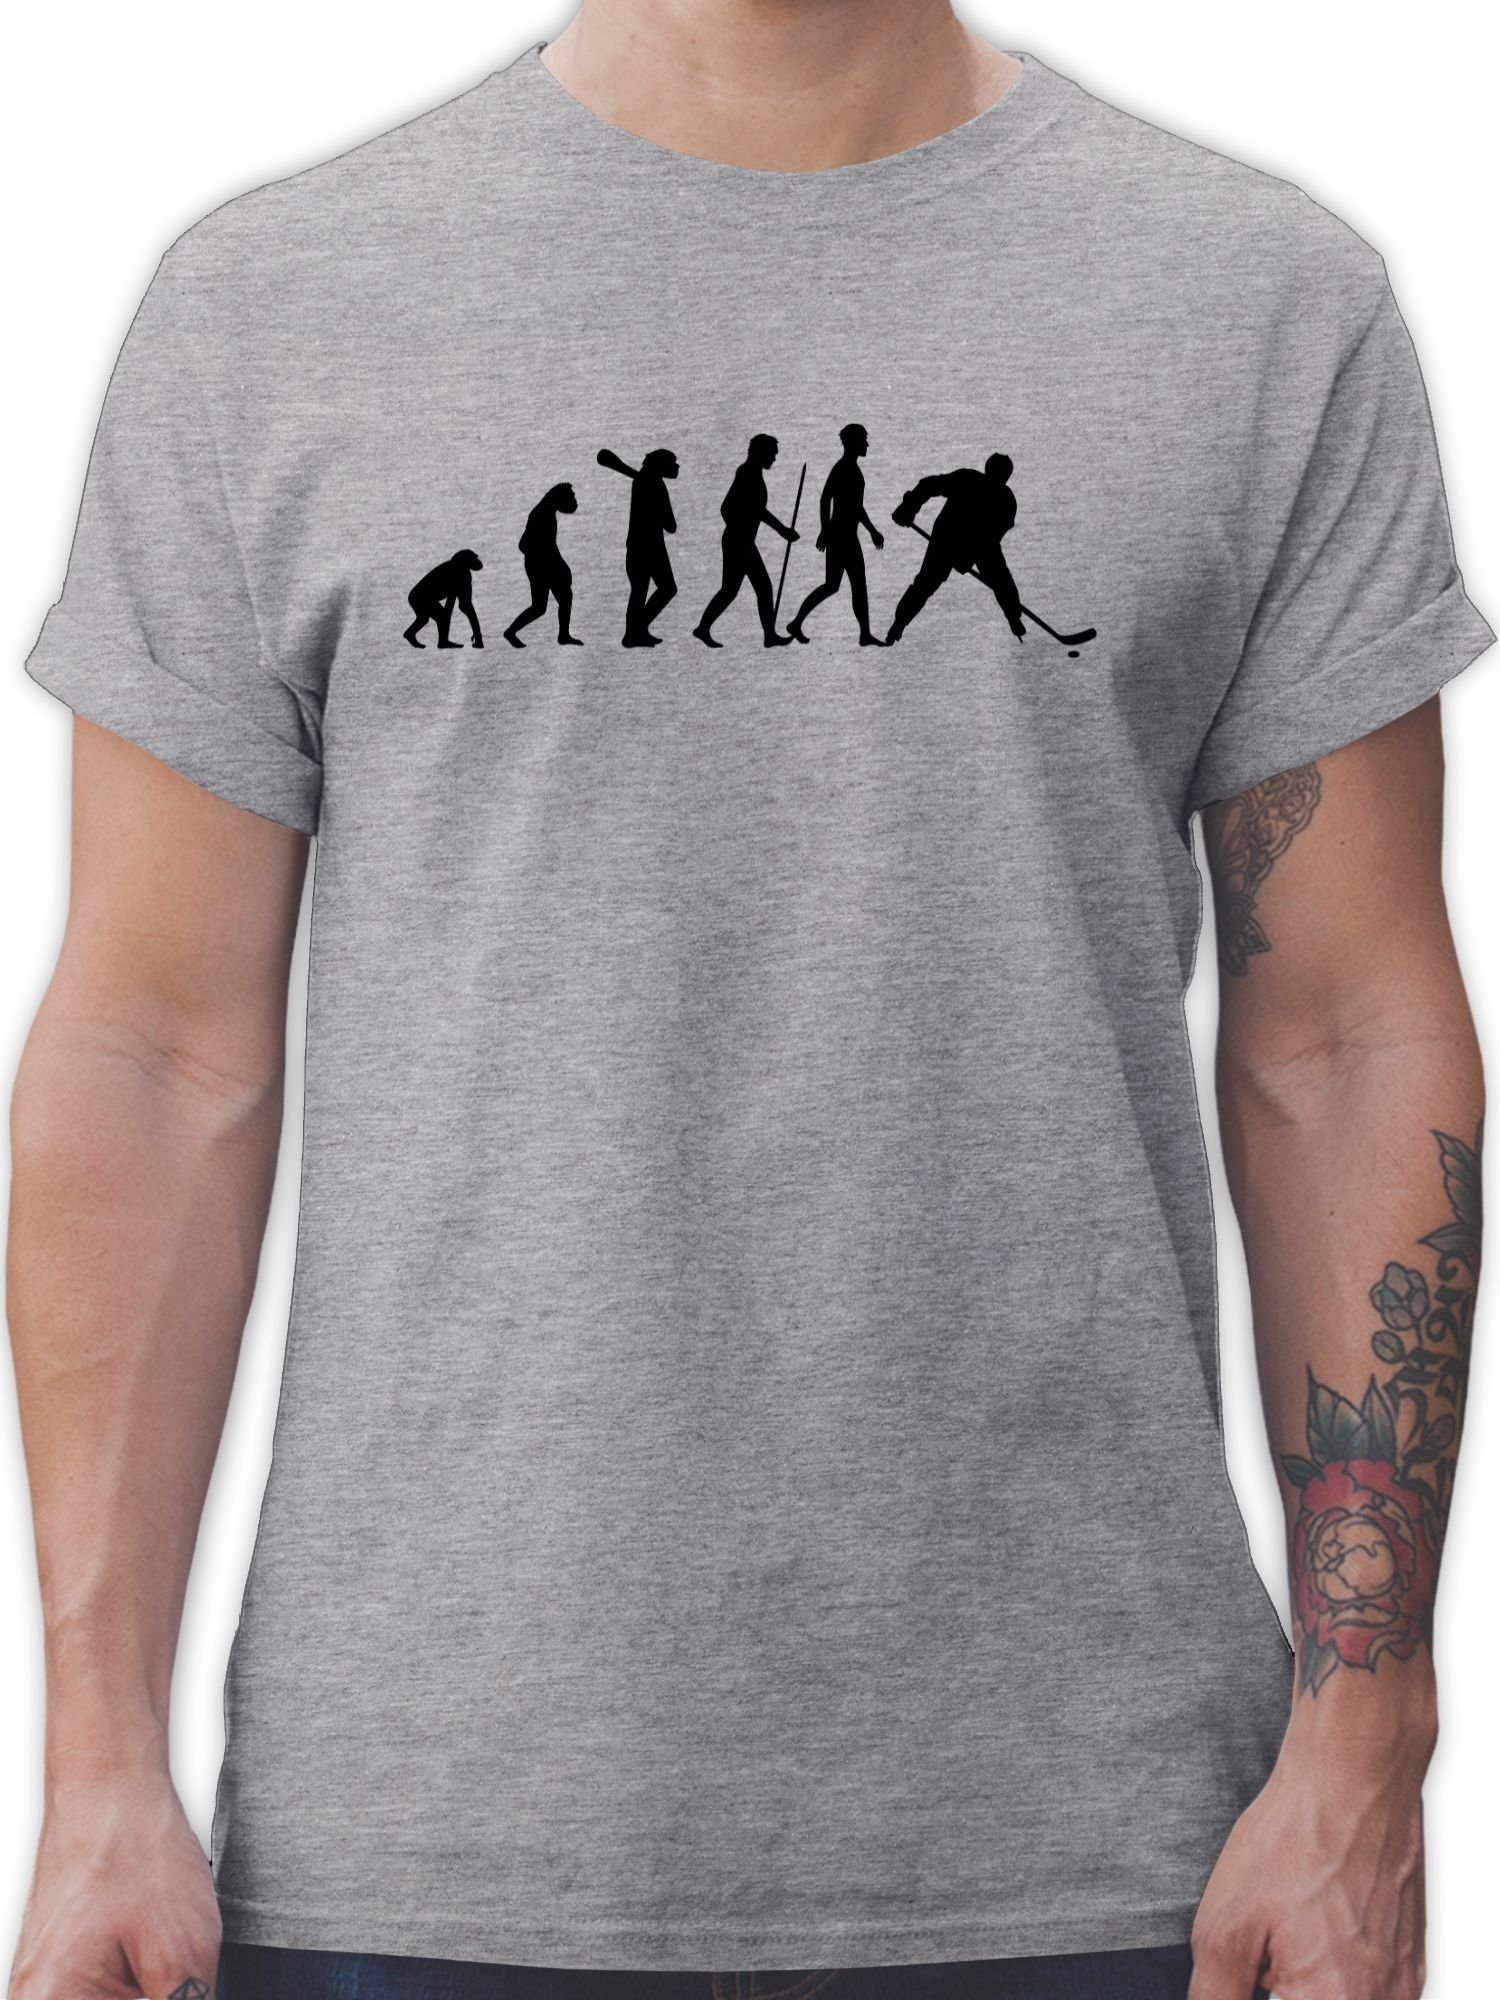 Evolution Shirtracer Eishockey Outfit T-Shirt Evolution 2 meliert Grau